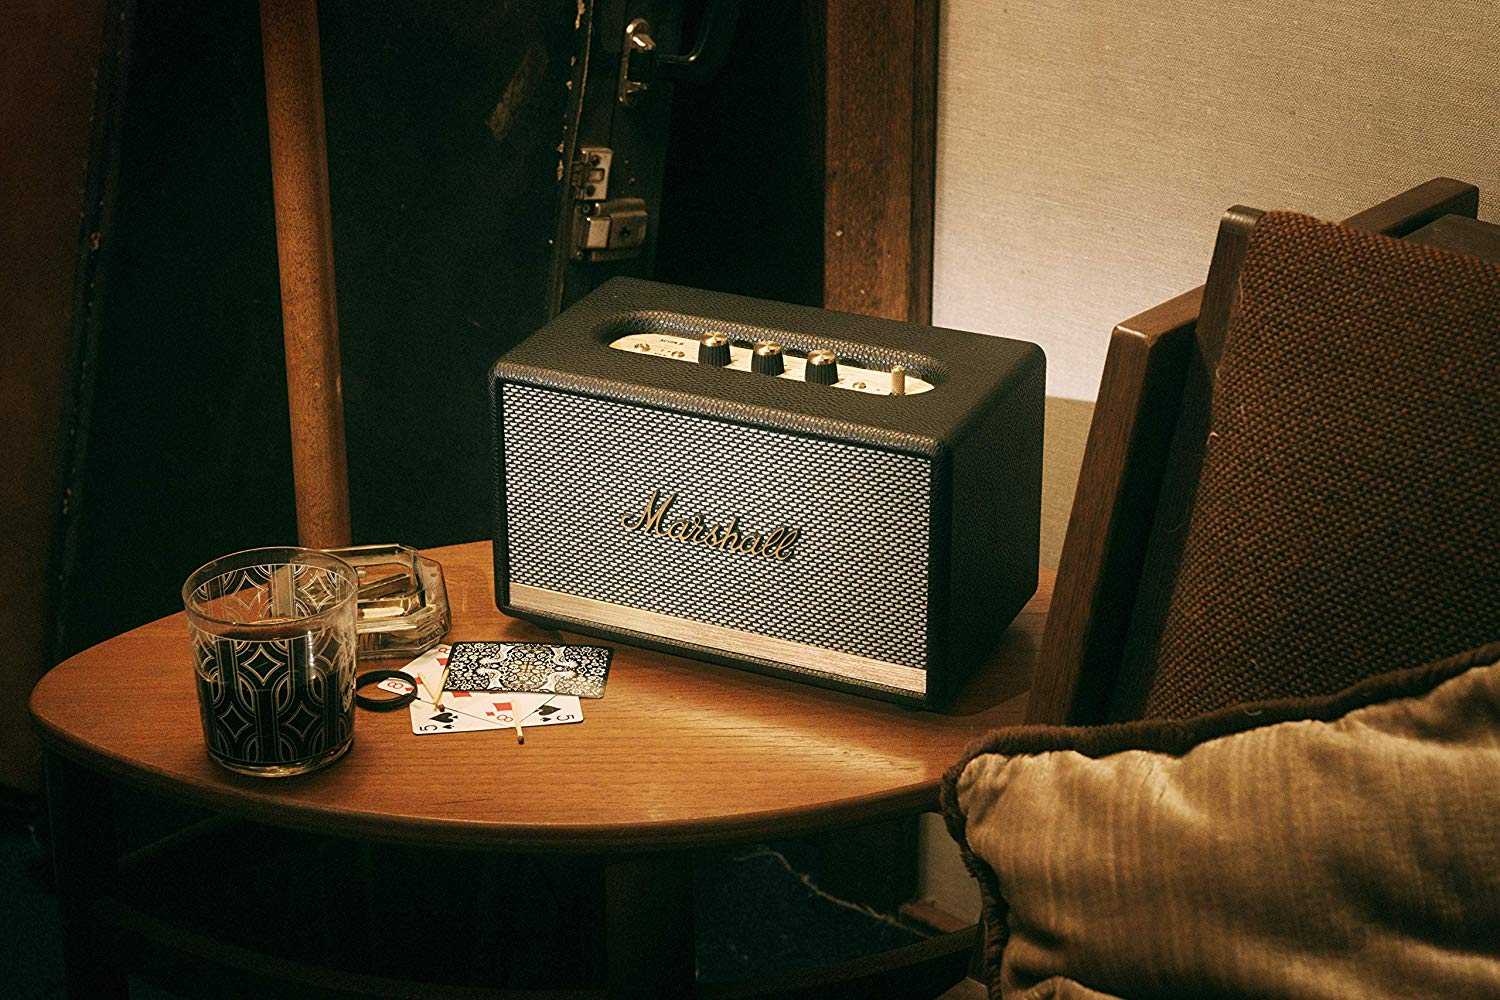 Marshall Acton II 無線藍芽 喇叭音響 藍芽5.0 黑色 | My Ear耳機專門店